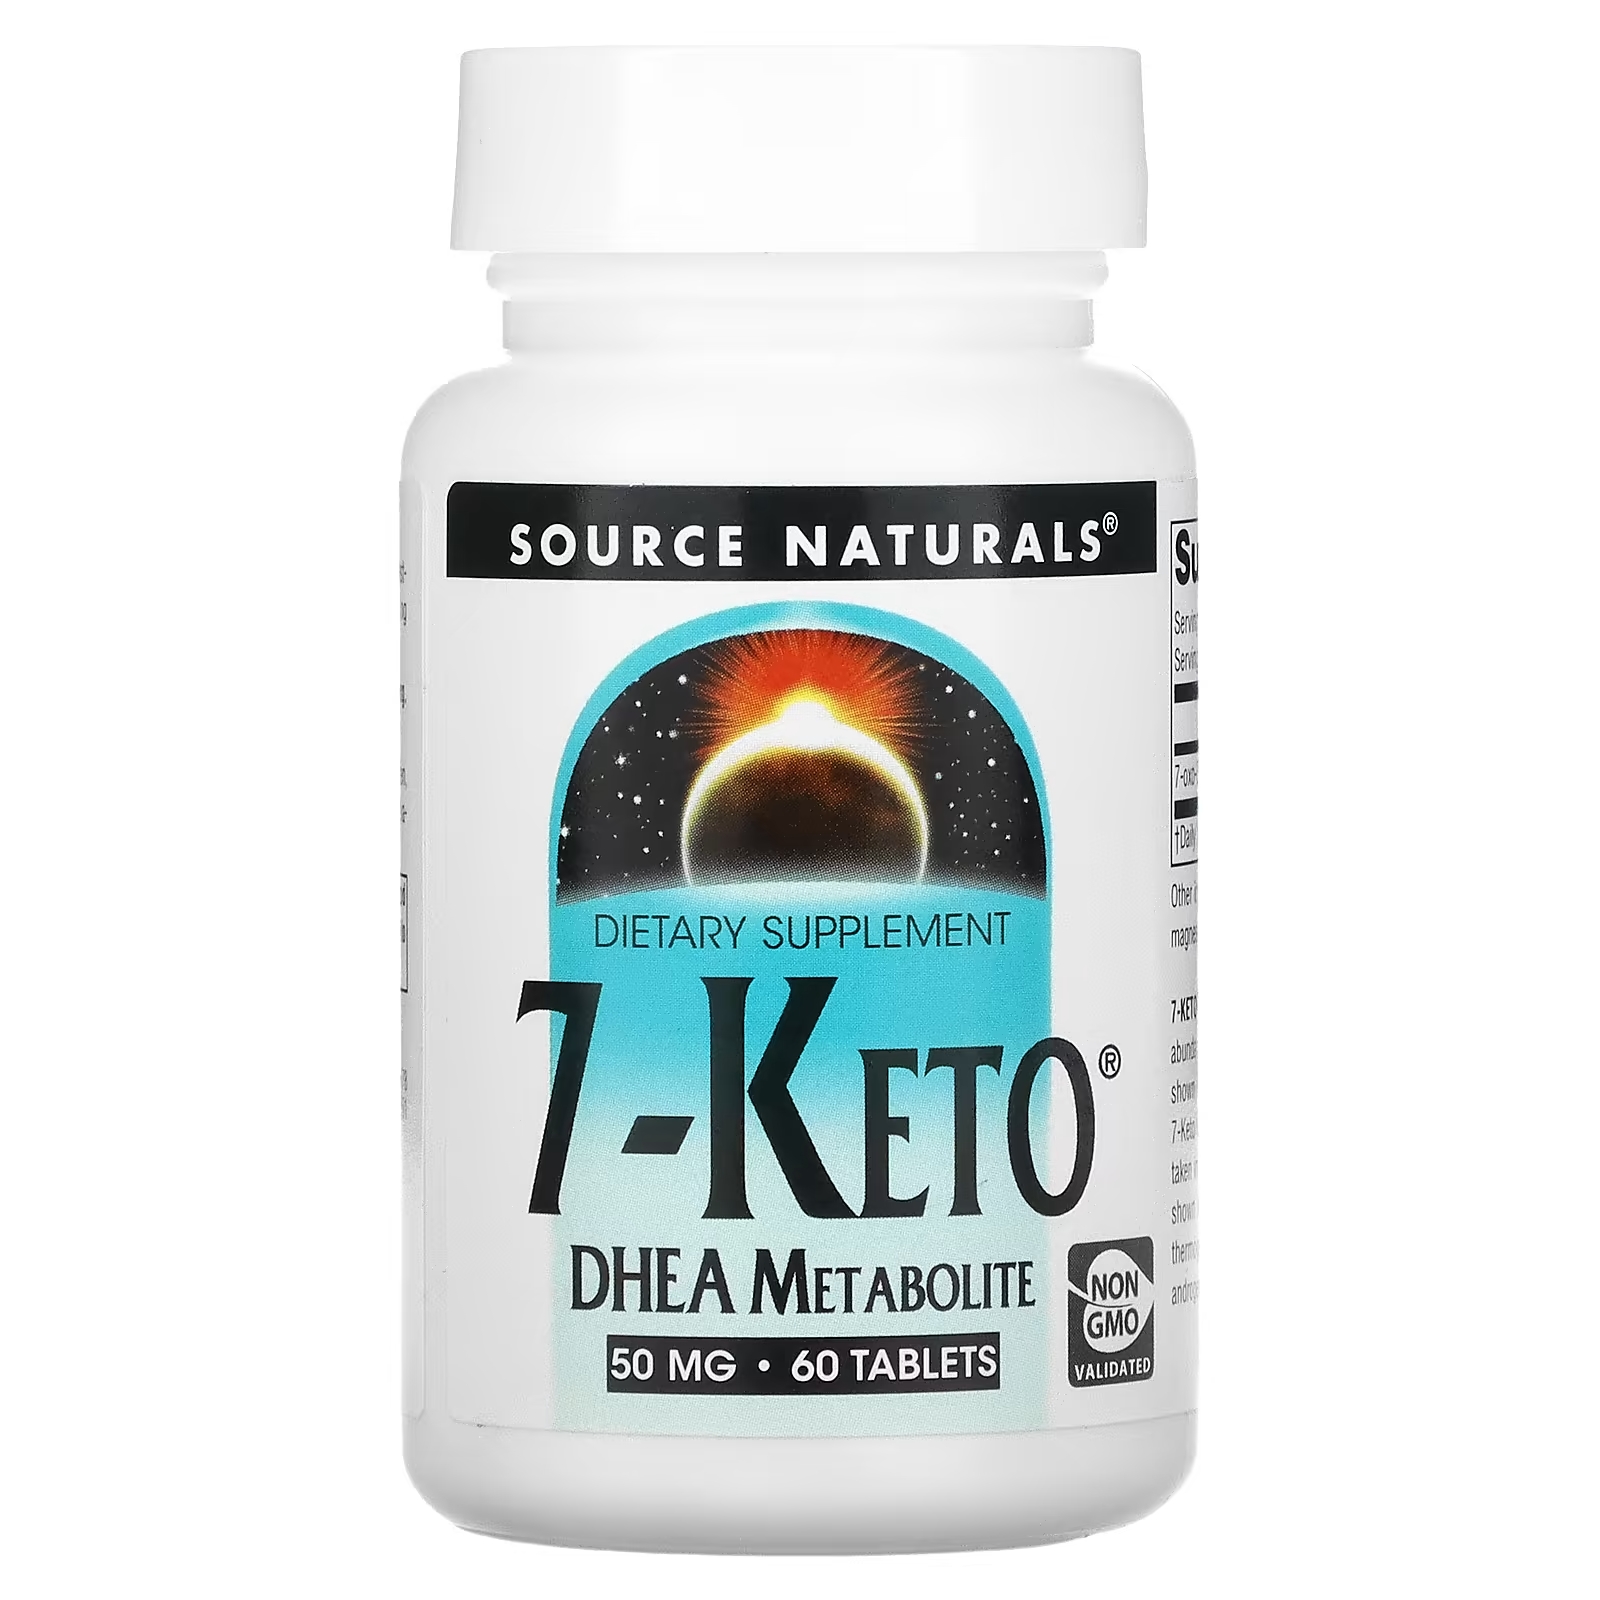 Source Naturals 7-Keto метаболит ДГЭА 50 мг, 60 таблеток дгэа метаболит life extension 7 keto 60 капсул